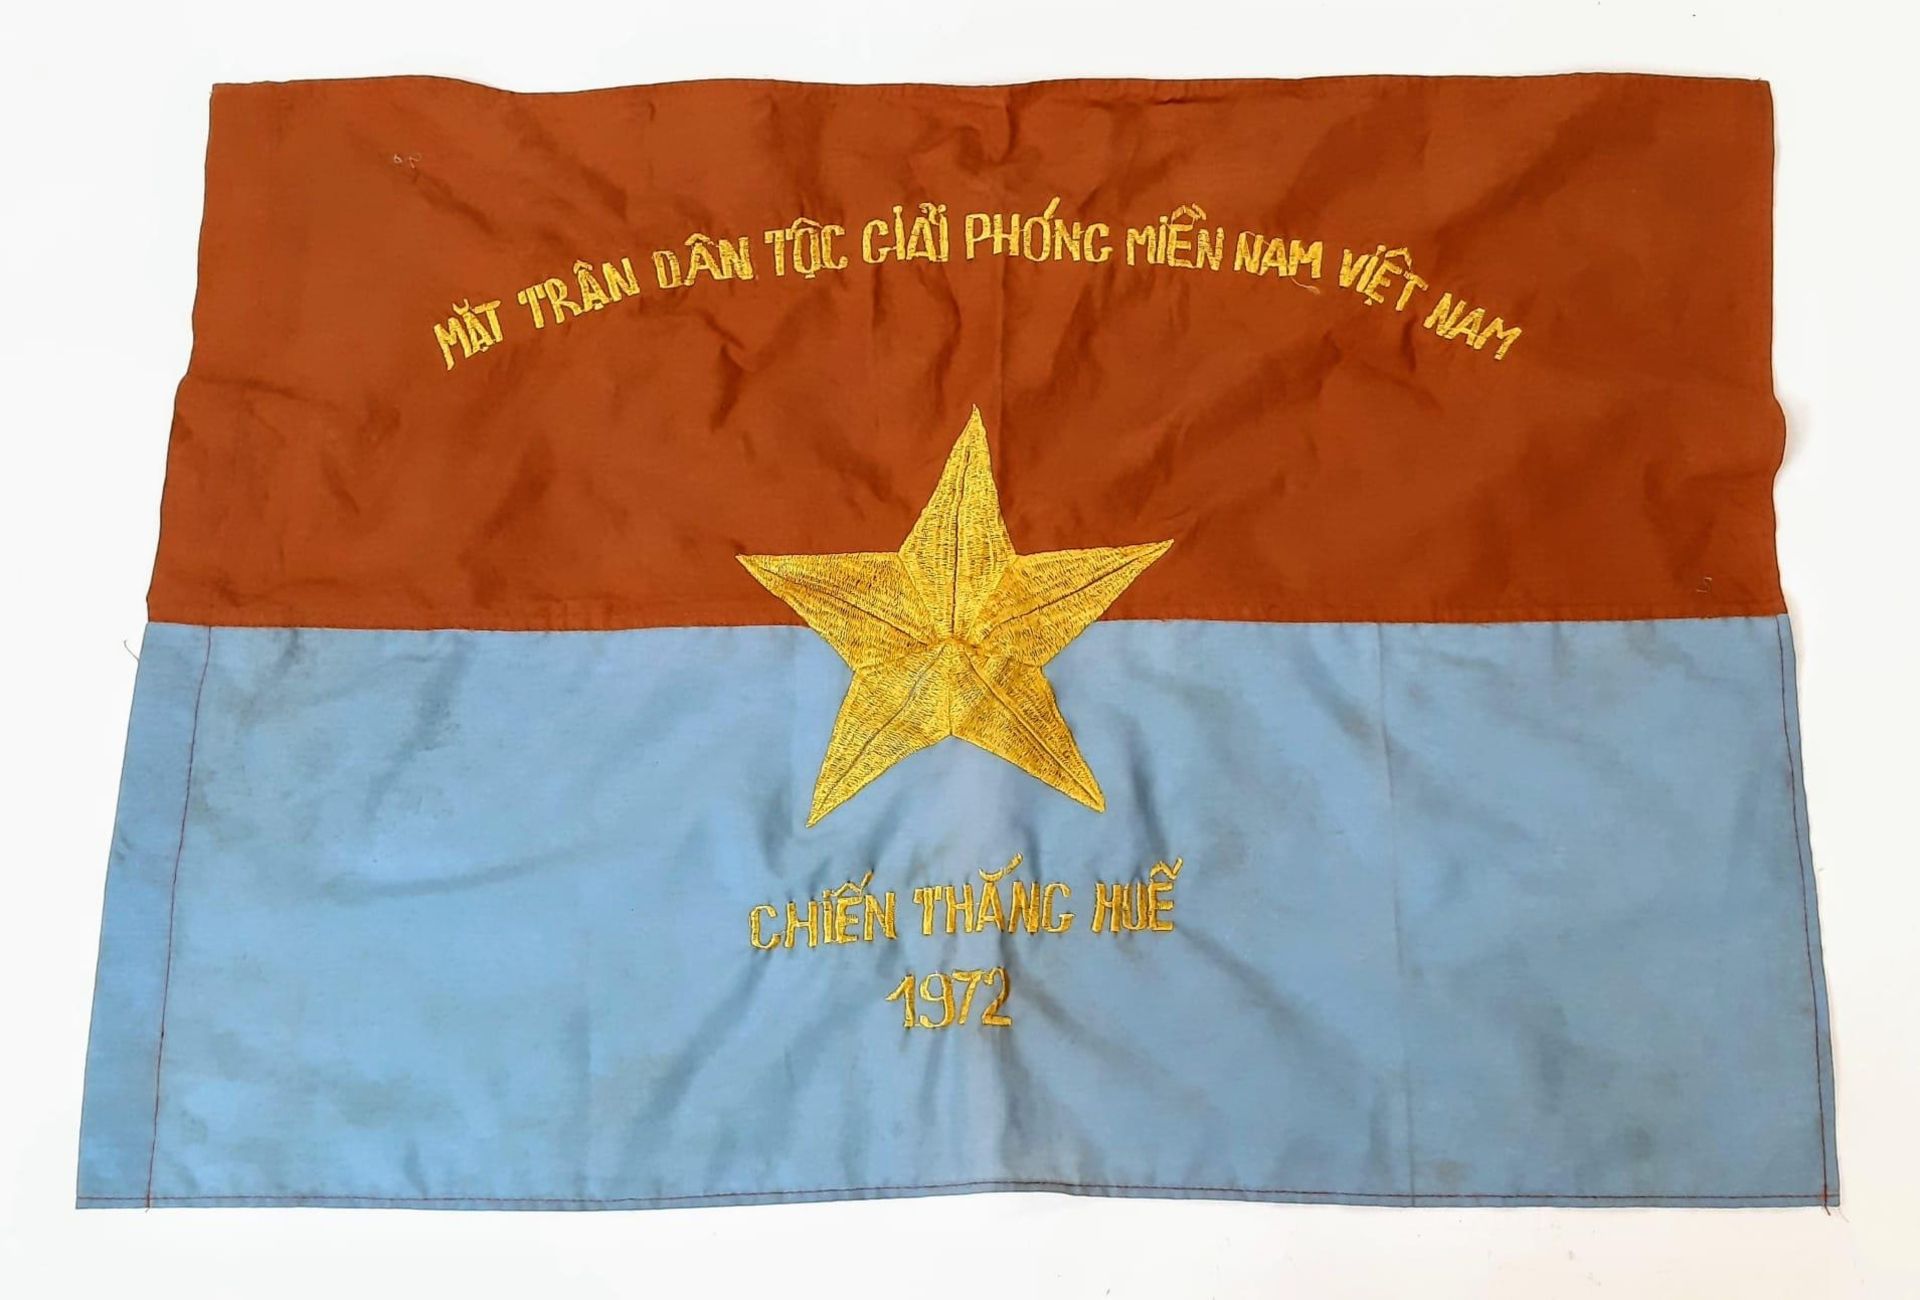 Vietnam War Era Vietcong Victory Flag. “National Liberation Army of Vietnam” “Victory” Thang Hue